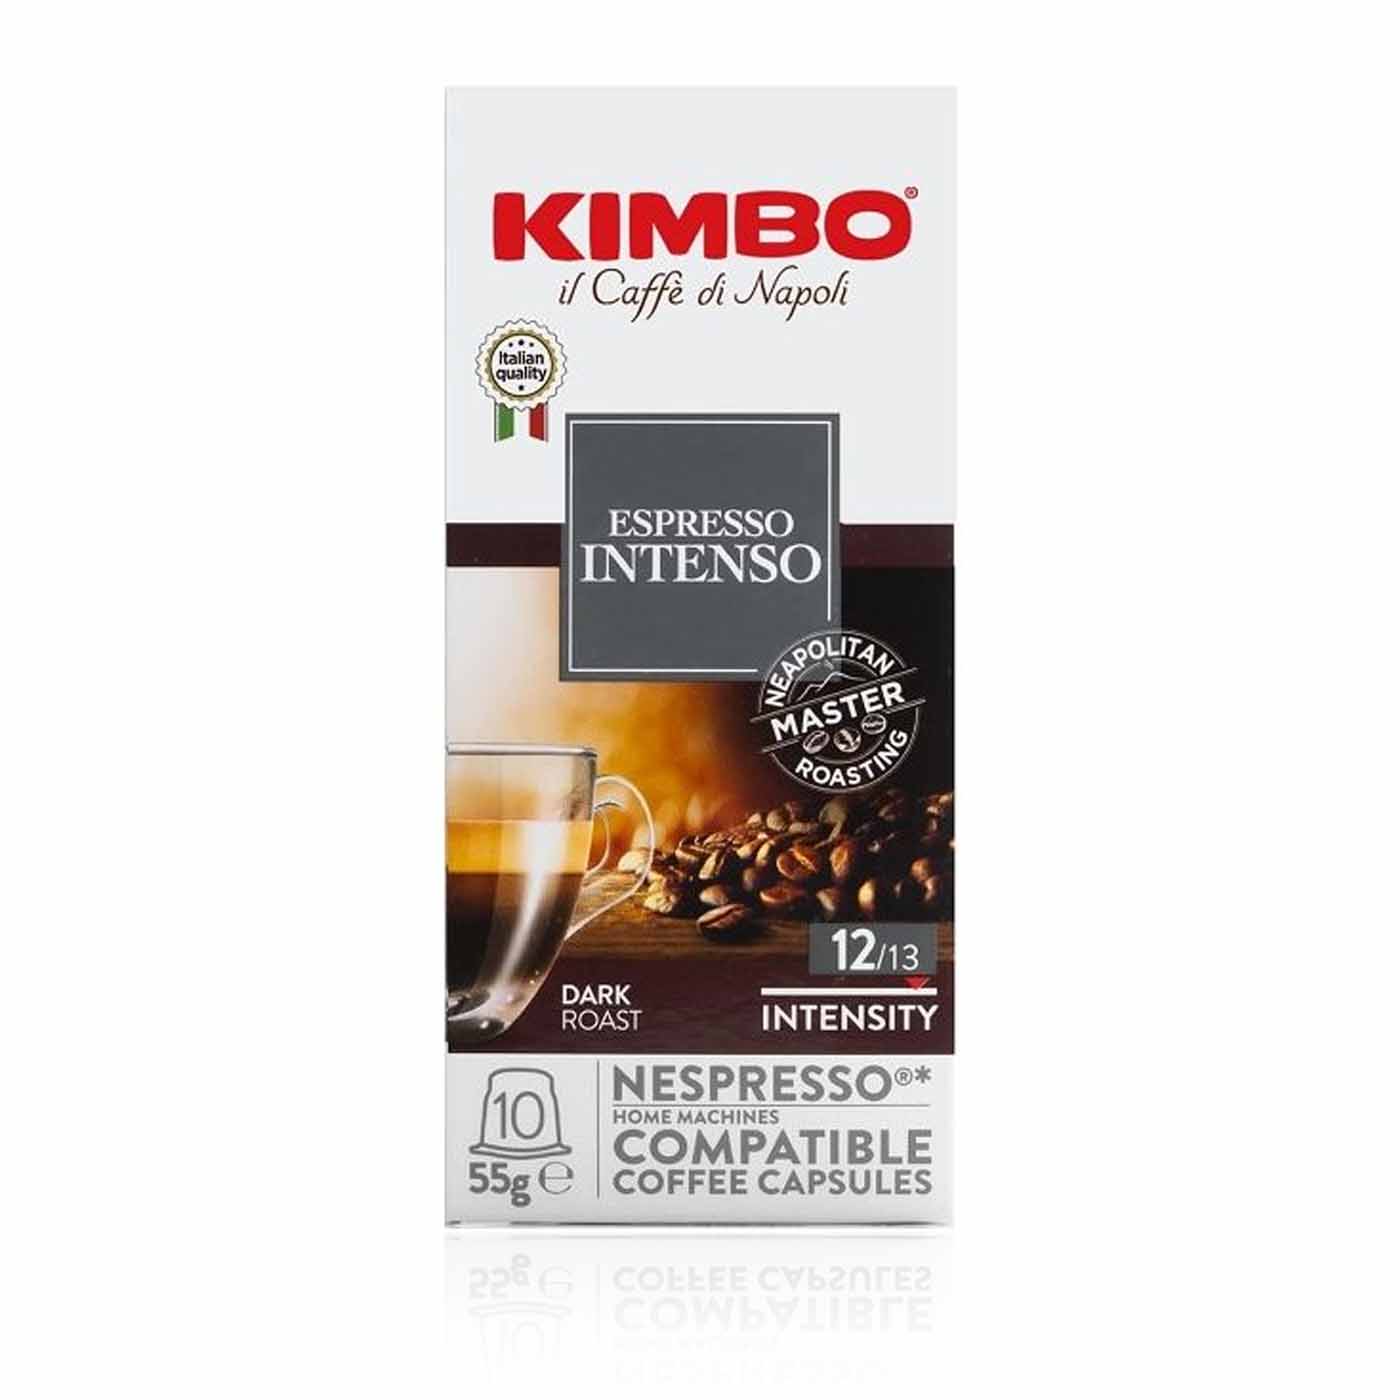 KIMBO Espresso intenso capsule-Espresso Kapseln - 0,055kg - italienisch-einkaufen.de